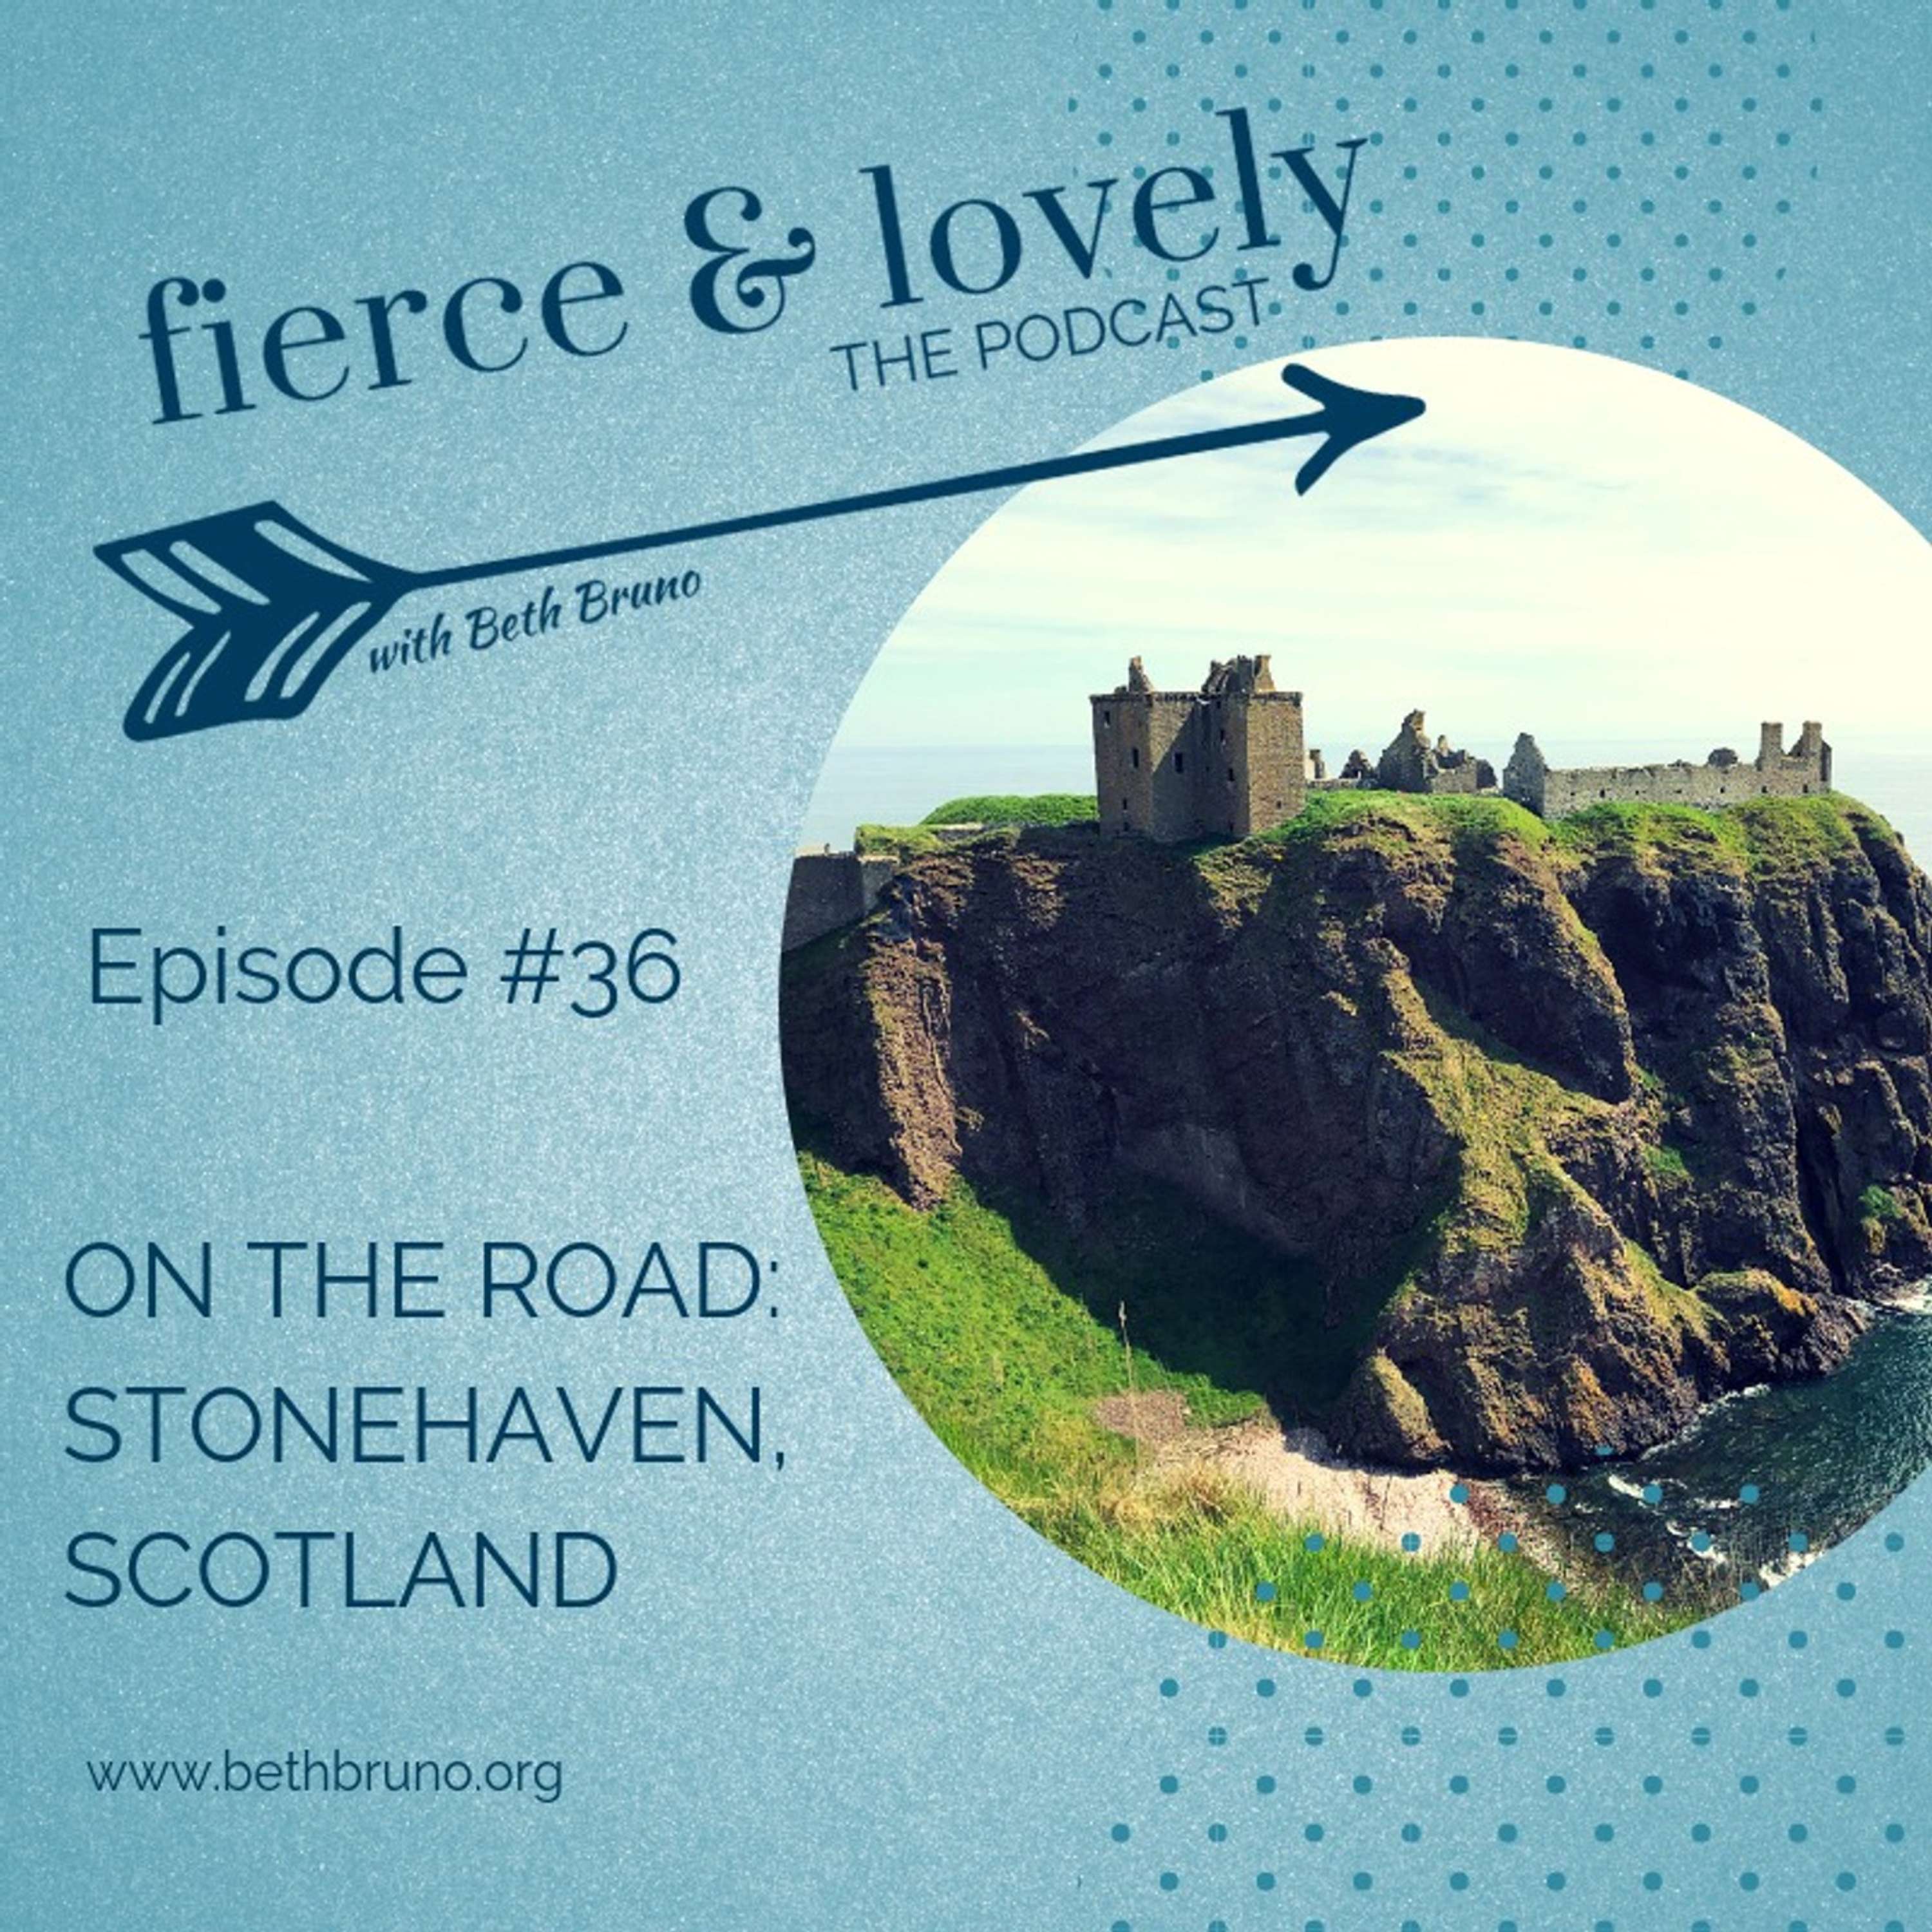 On the Road: Stonehaven, Scotland